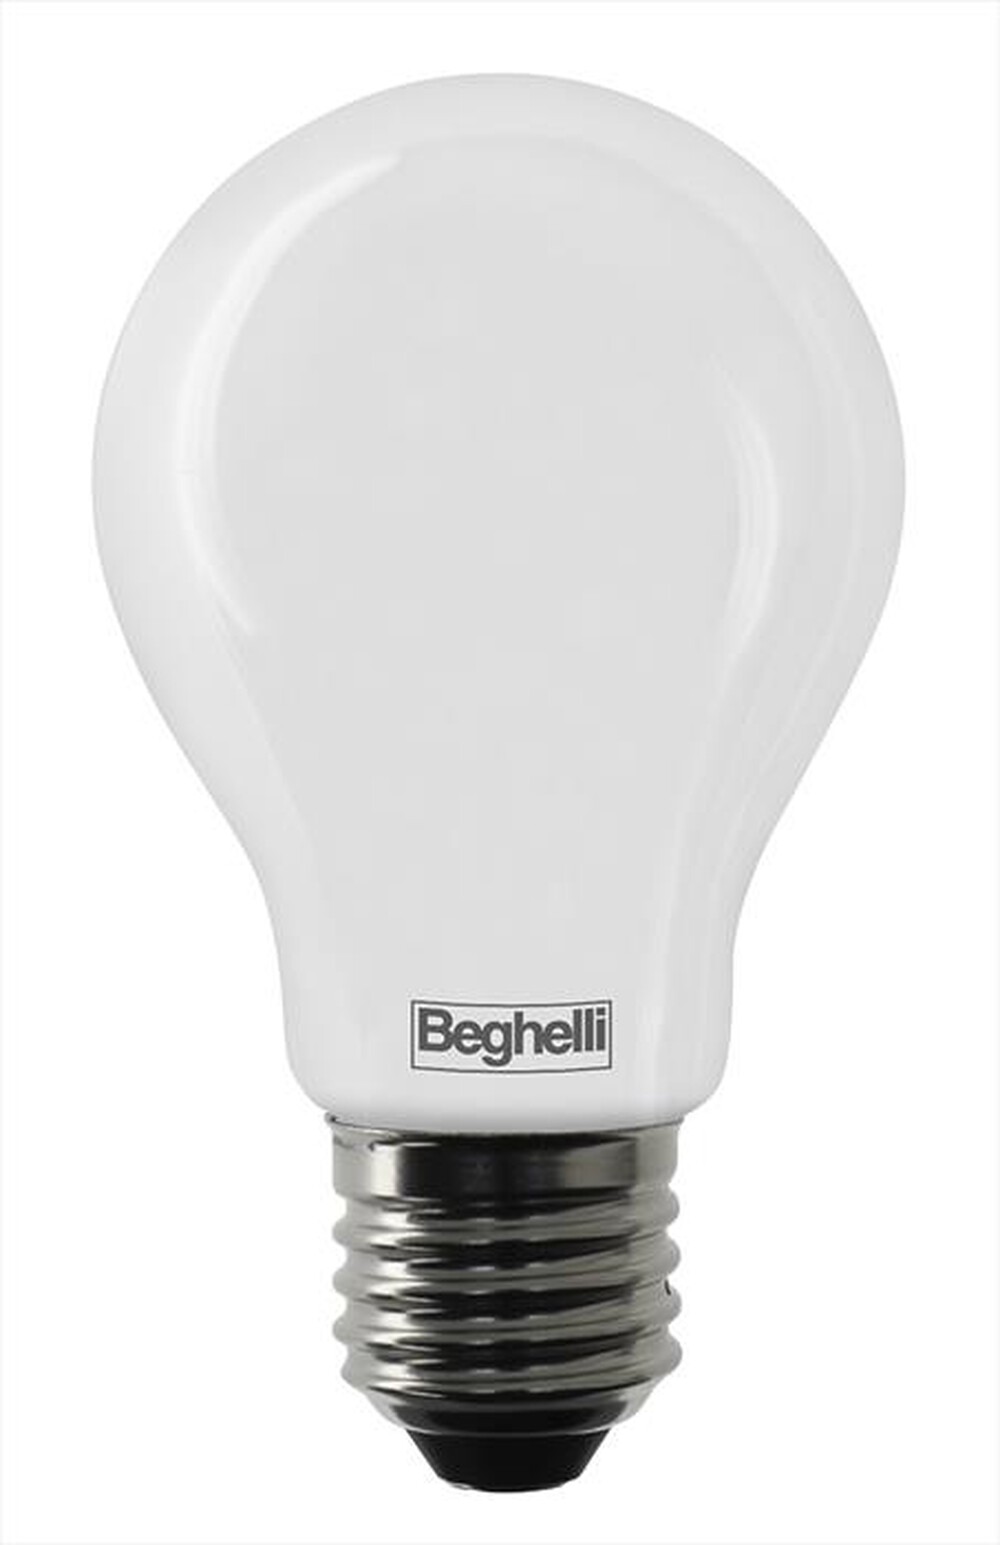 "BEGHELLI - TVETRO LED OP GOC 8W E27 3K BL-BIANCA"